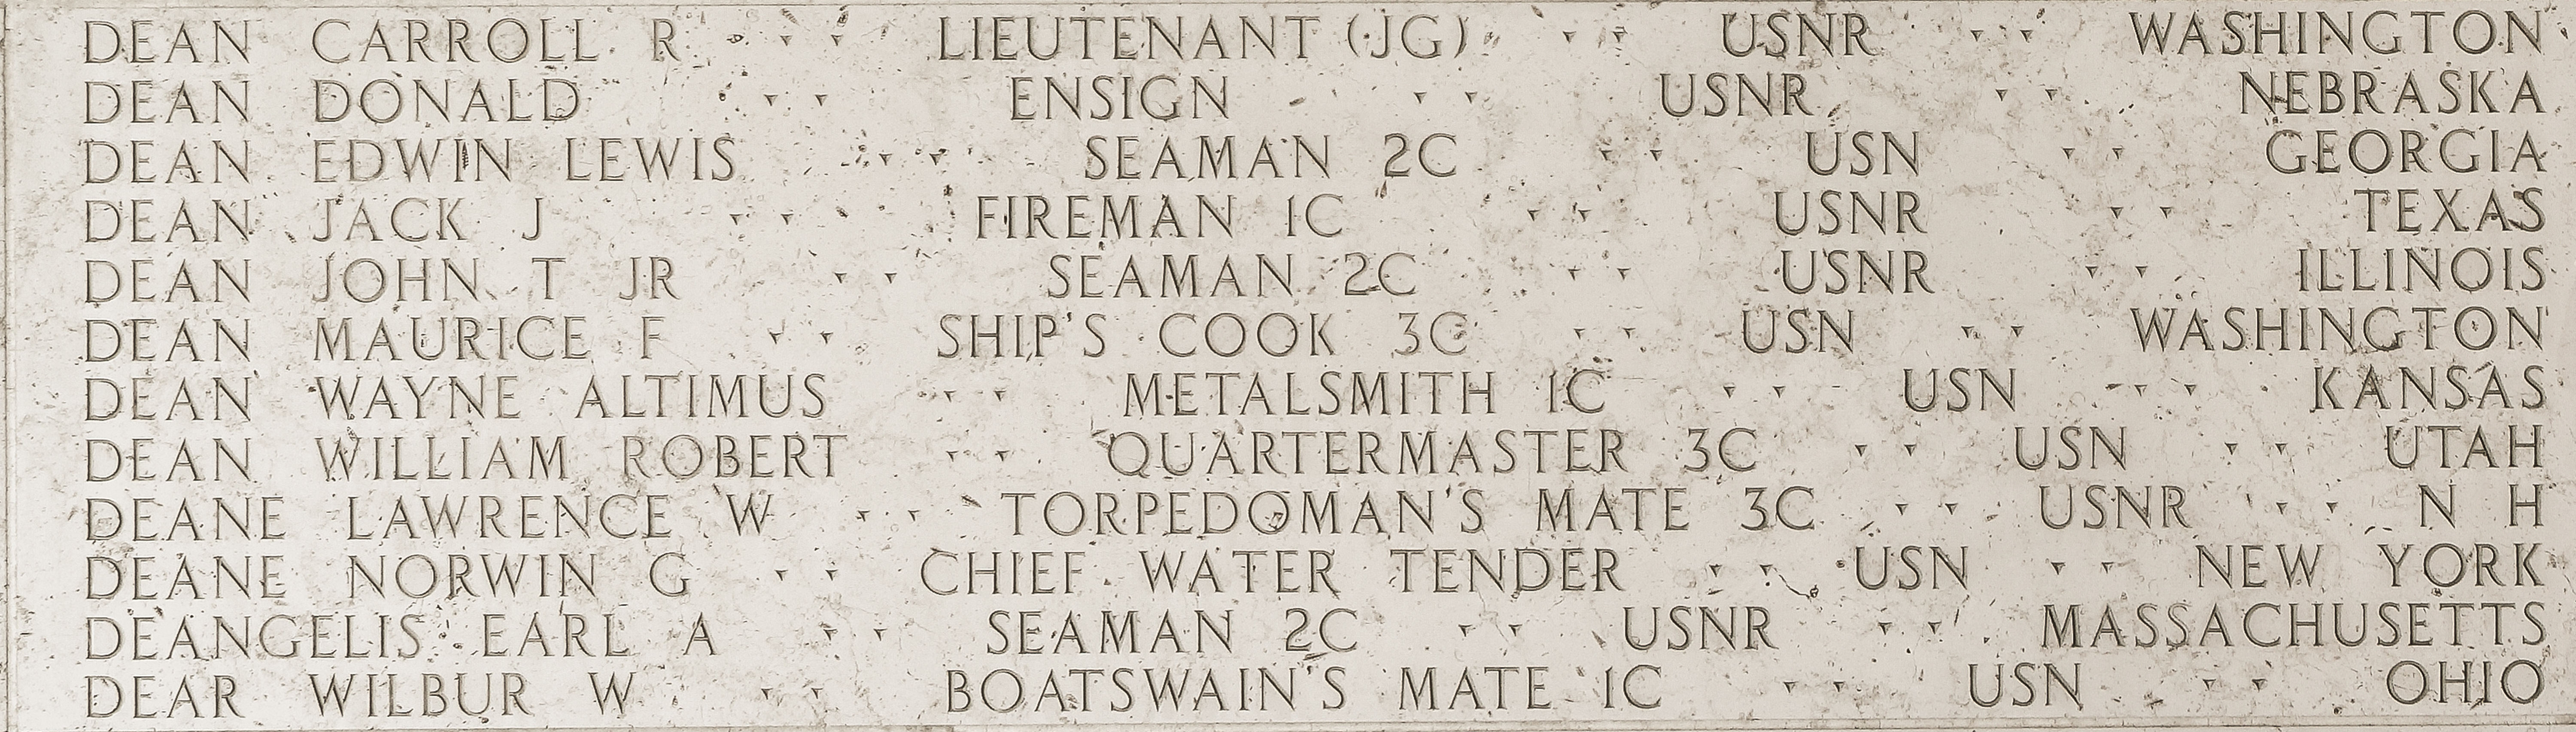 Edwin Lewis Dean, Seaman Second Class